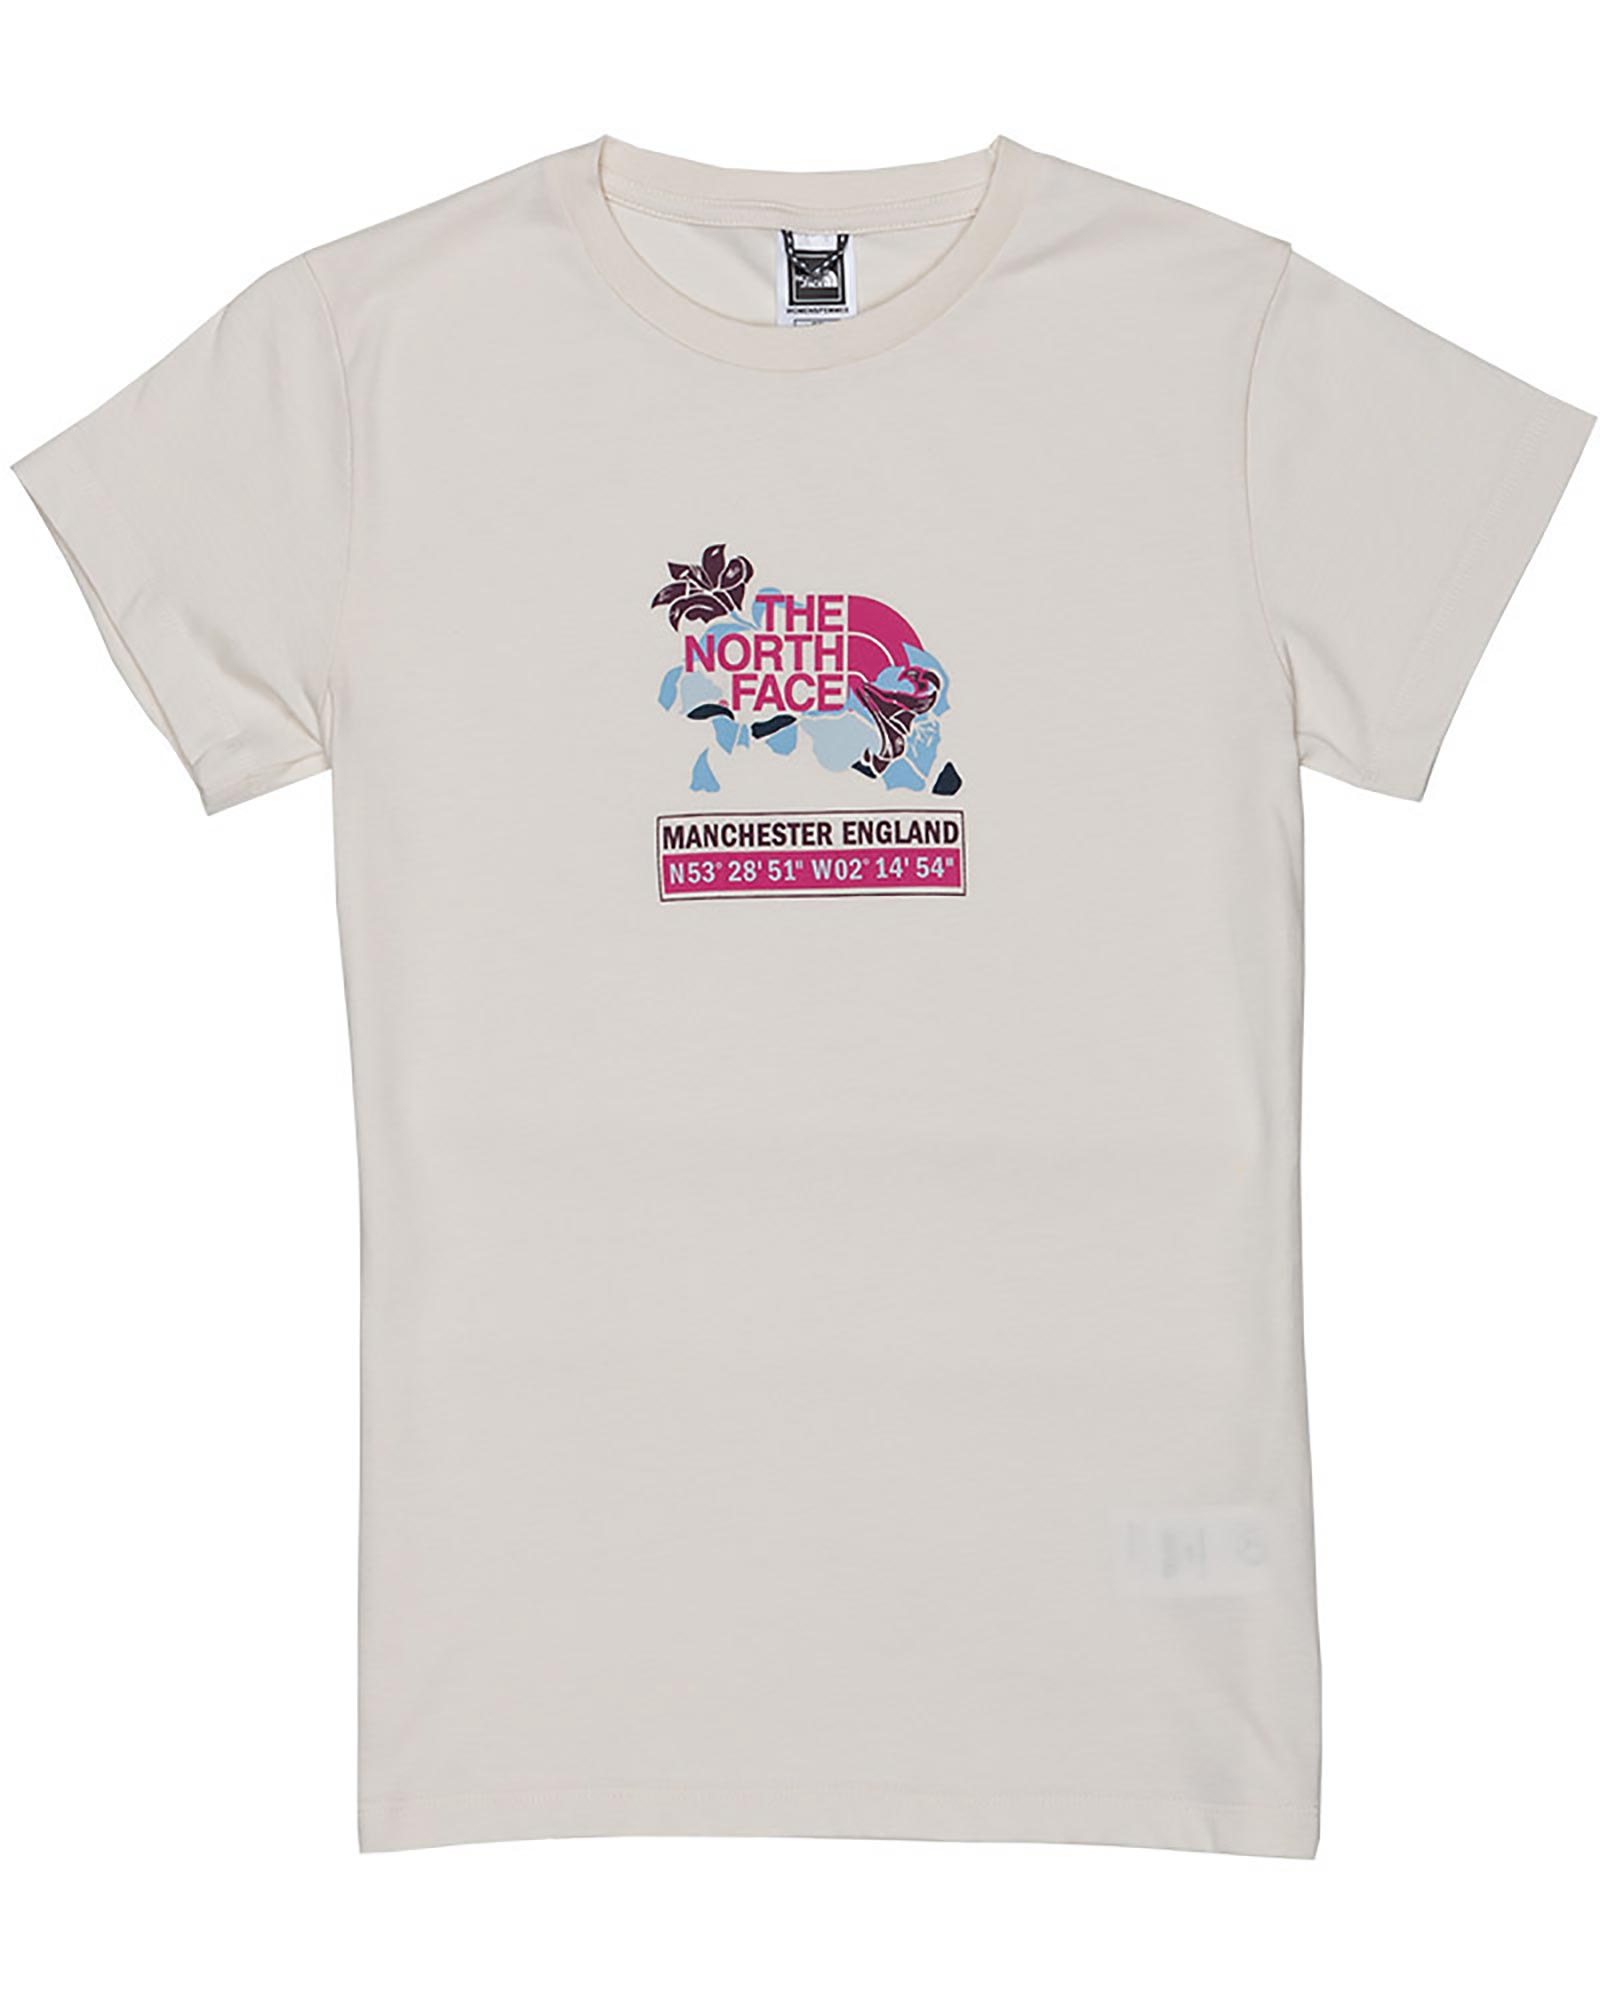 The North Face Manchester GPS Logo Women’s T Shirt - Cream S